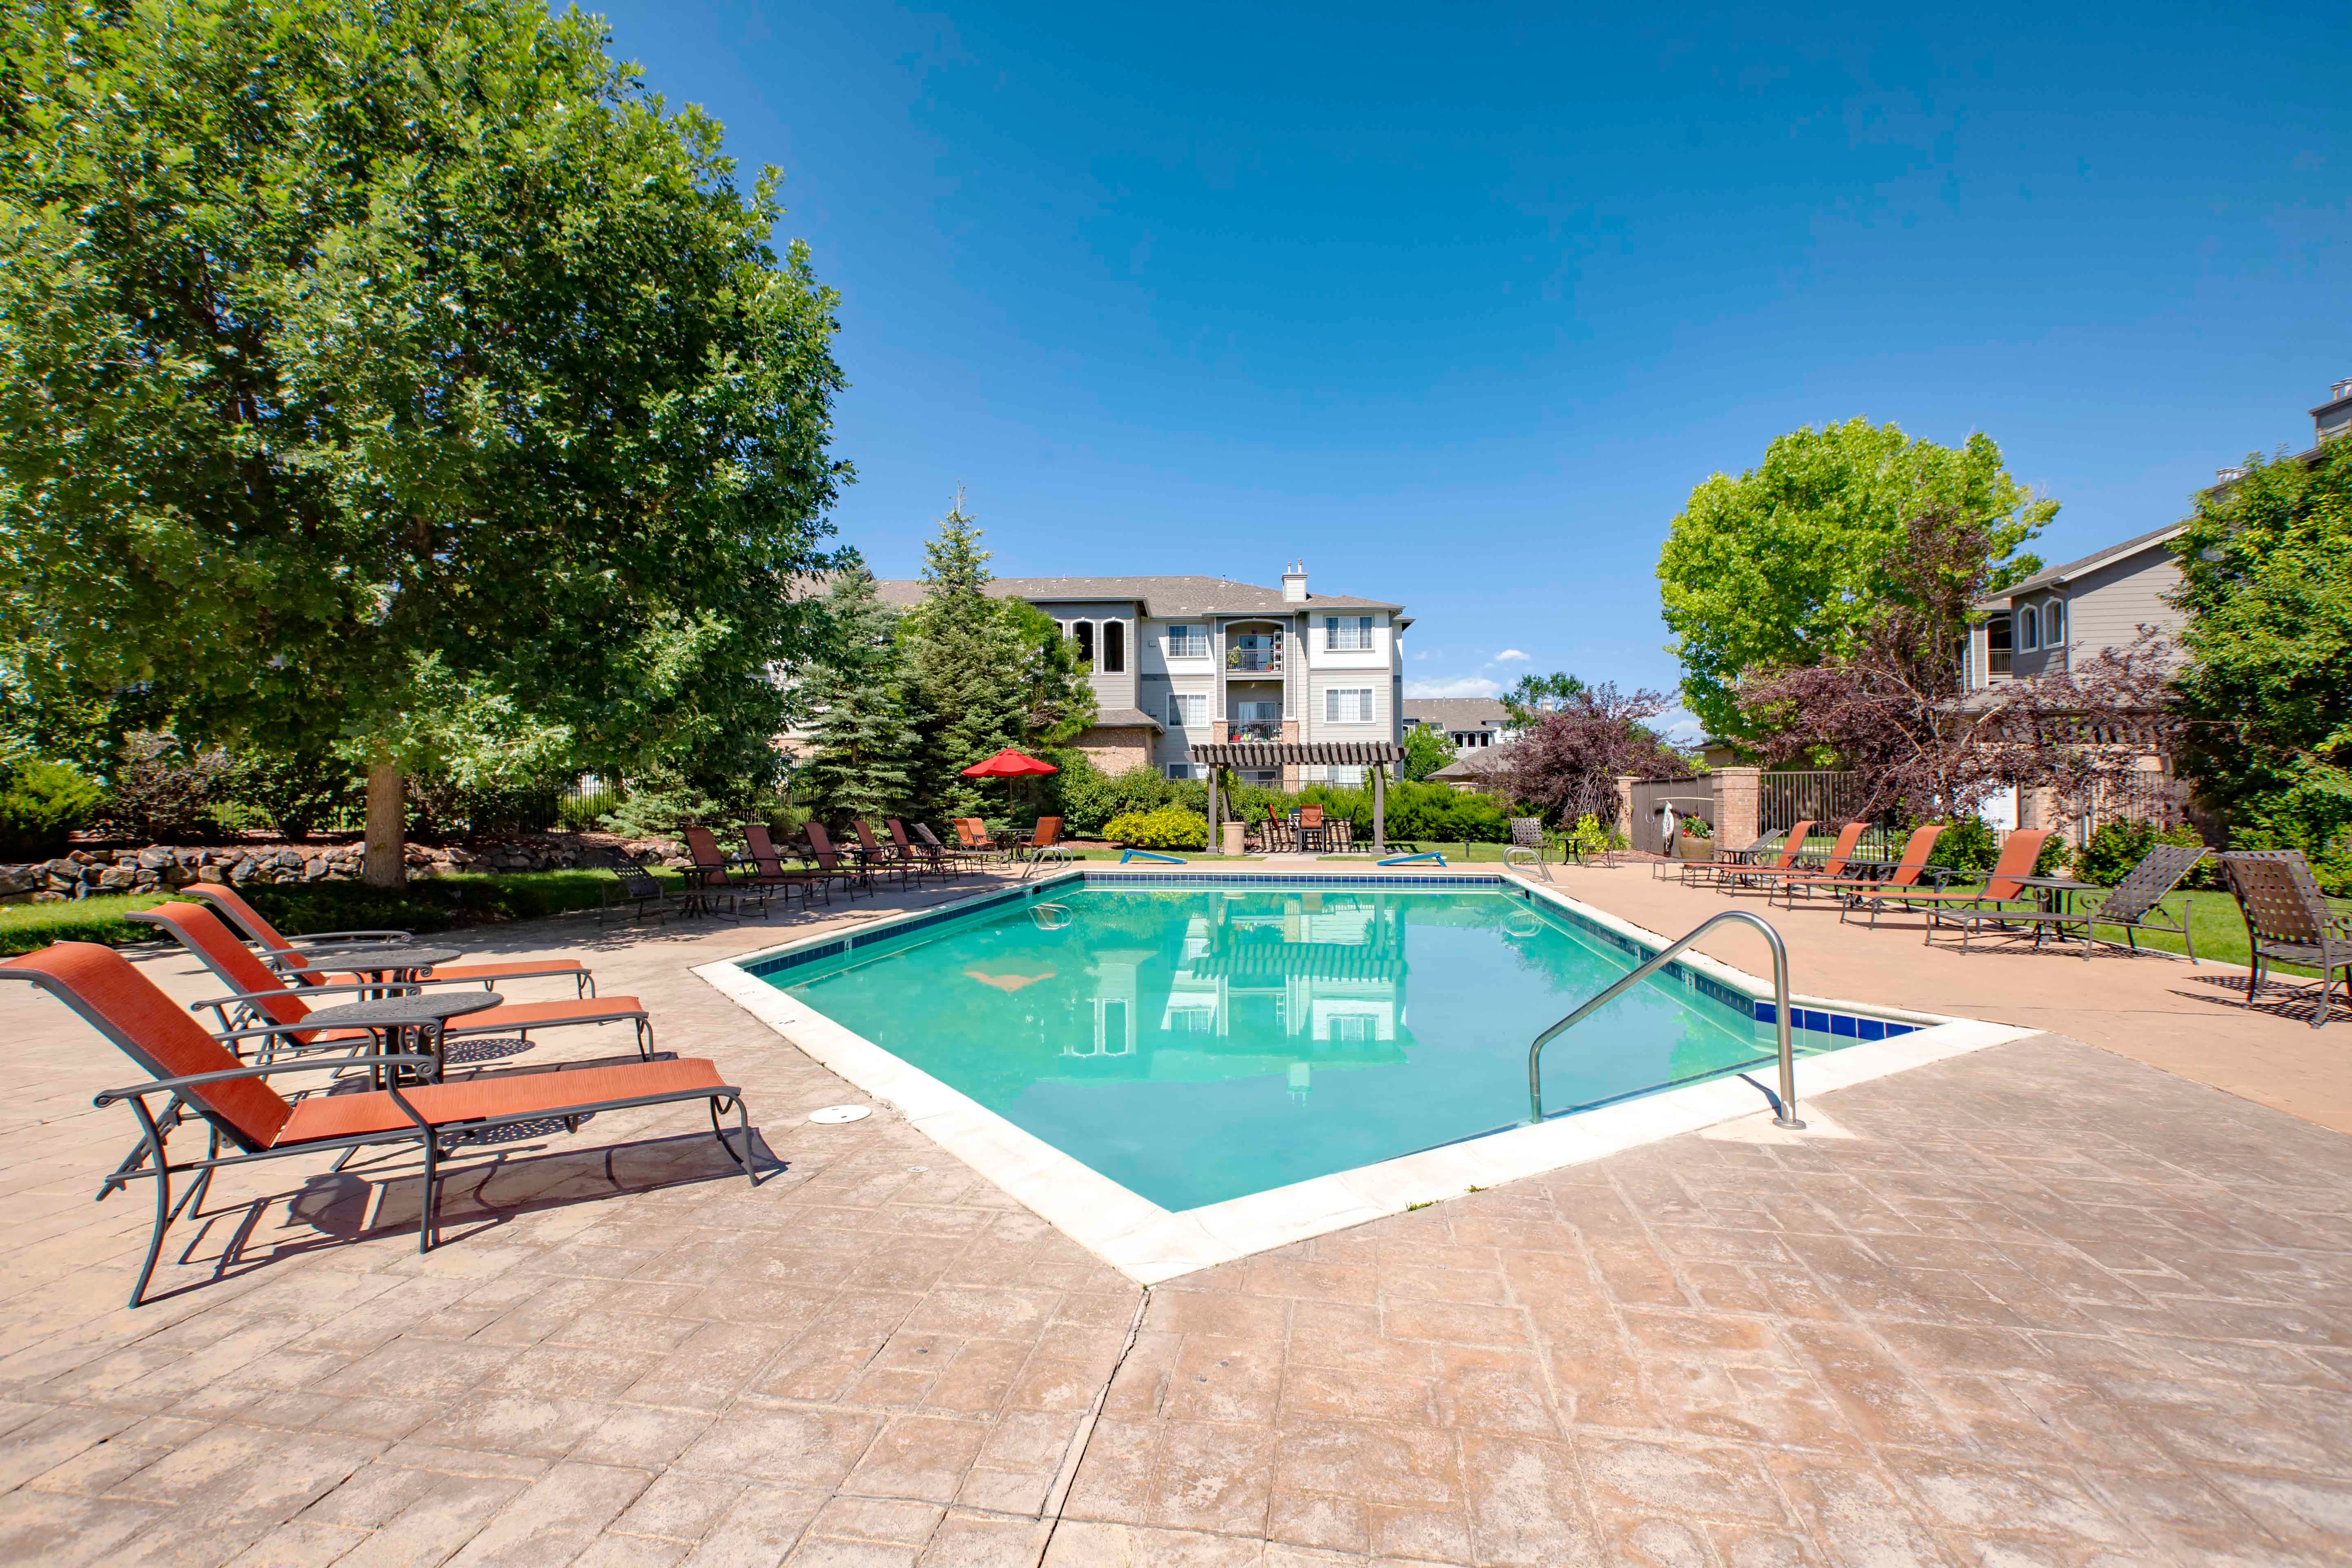  Swimming pool at Cherrywood Village Apartments, Parker, Colorado